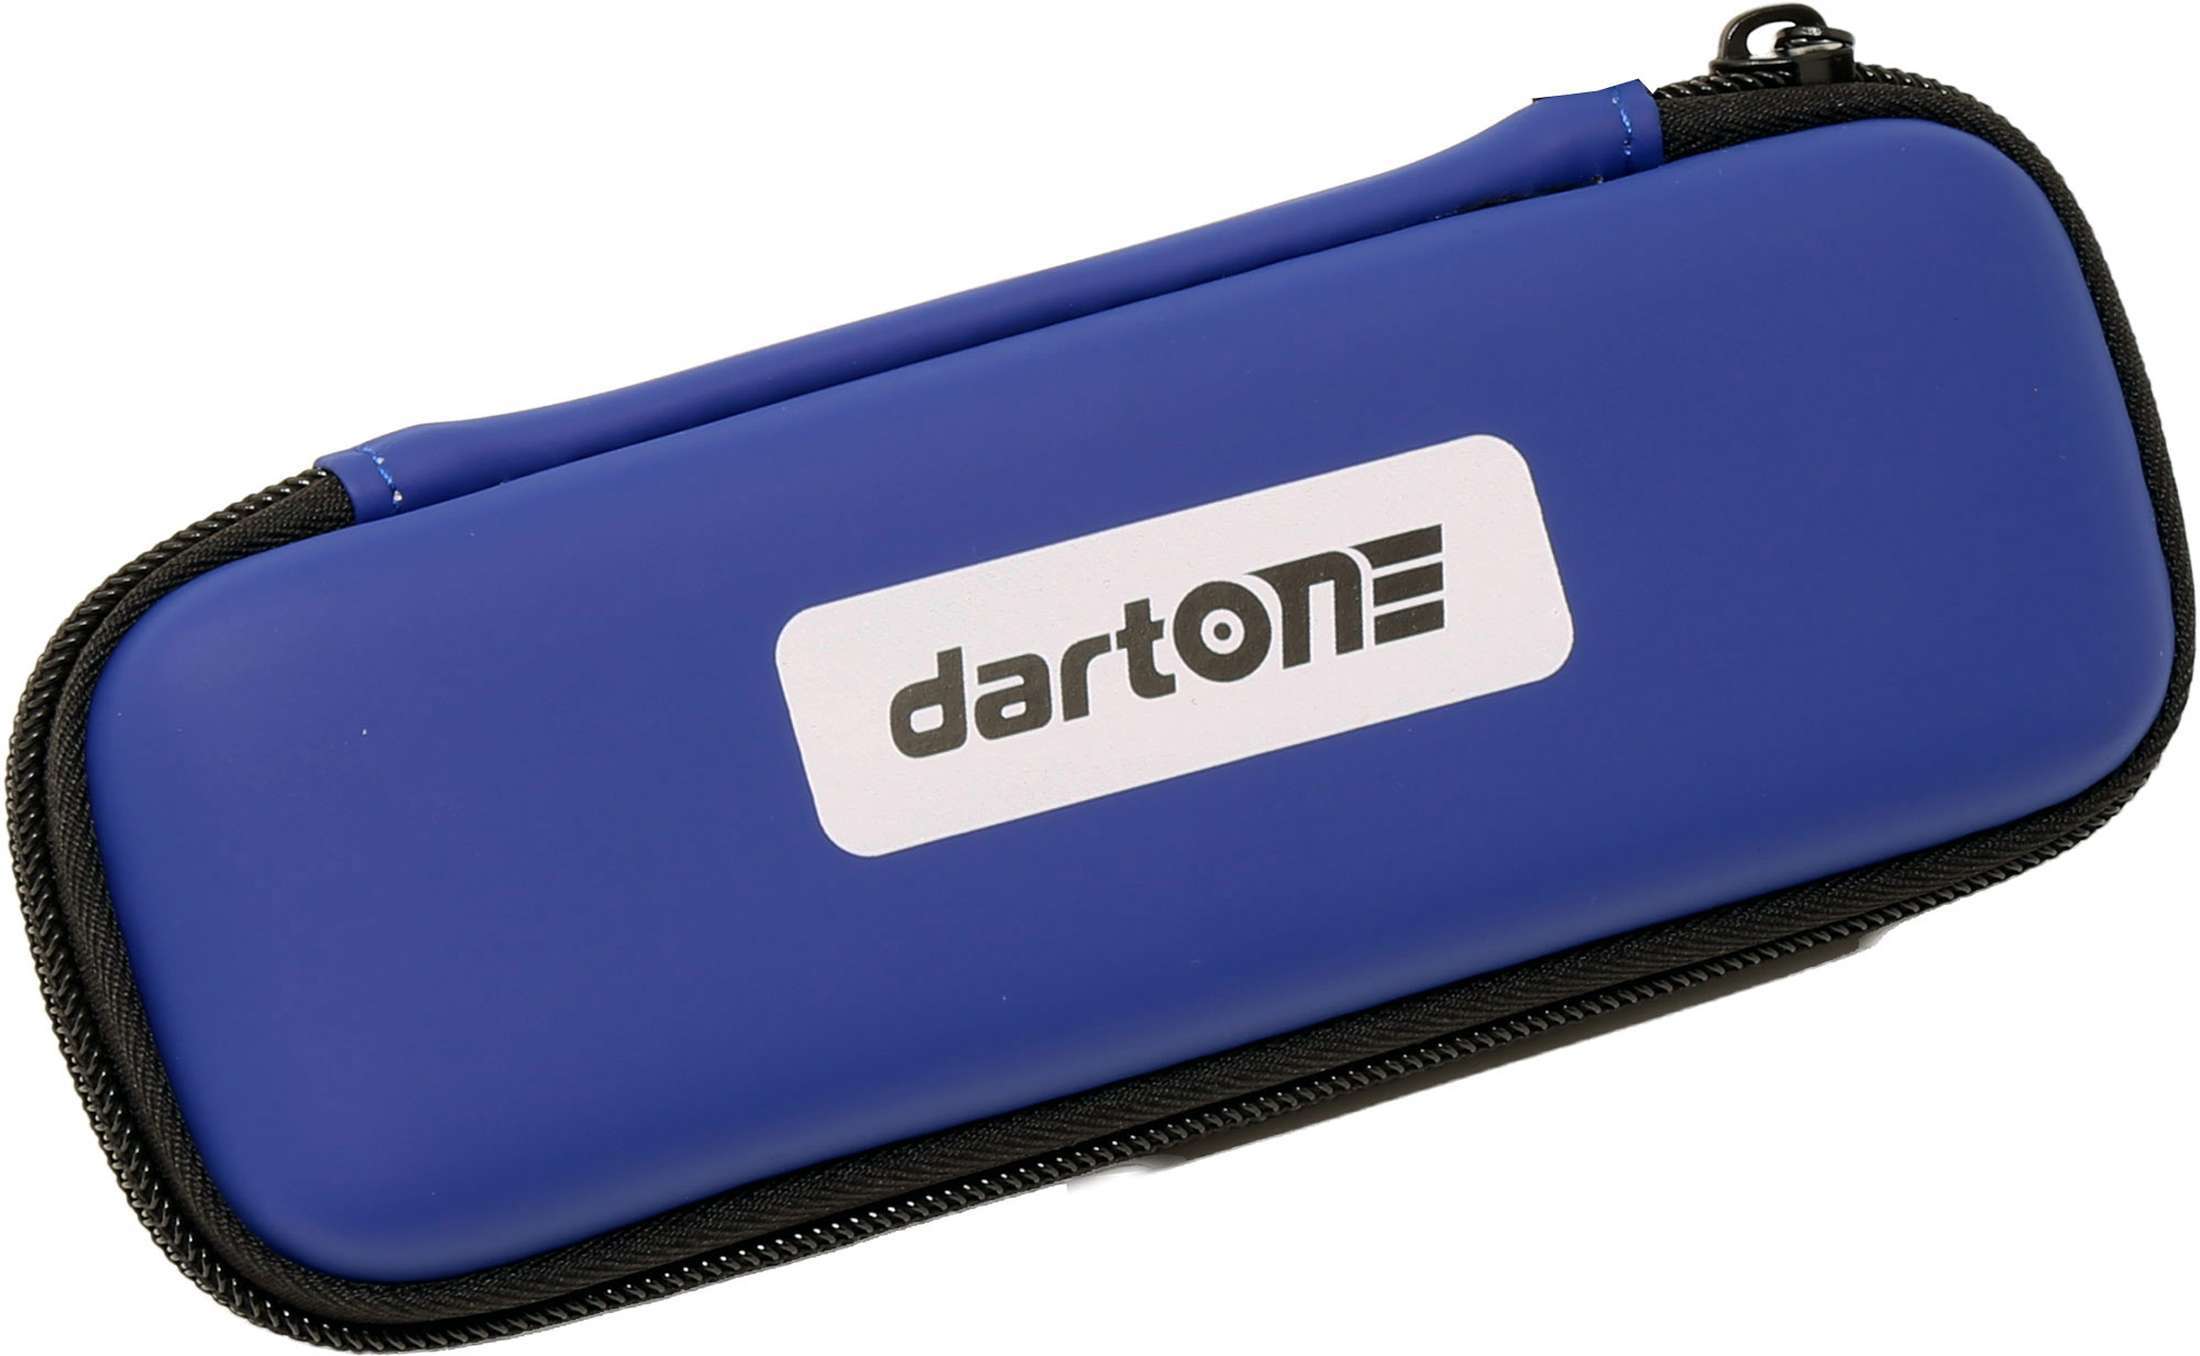 Darttasche Dartone Compact Blau-2